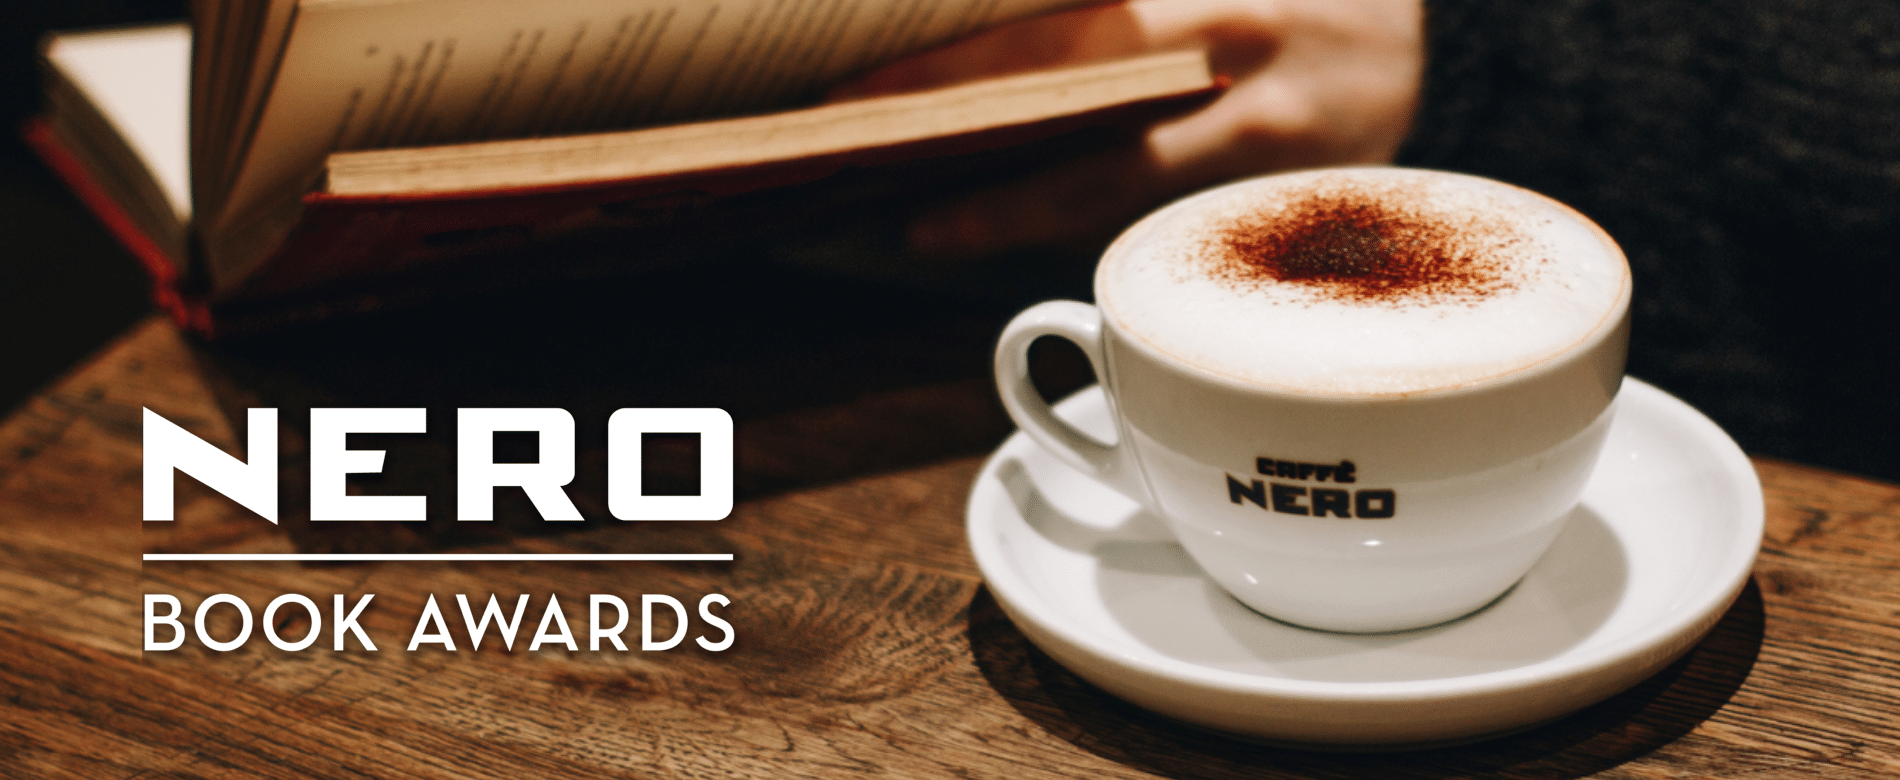 nero book awards